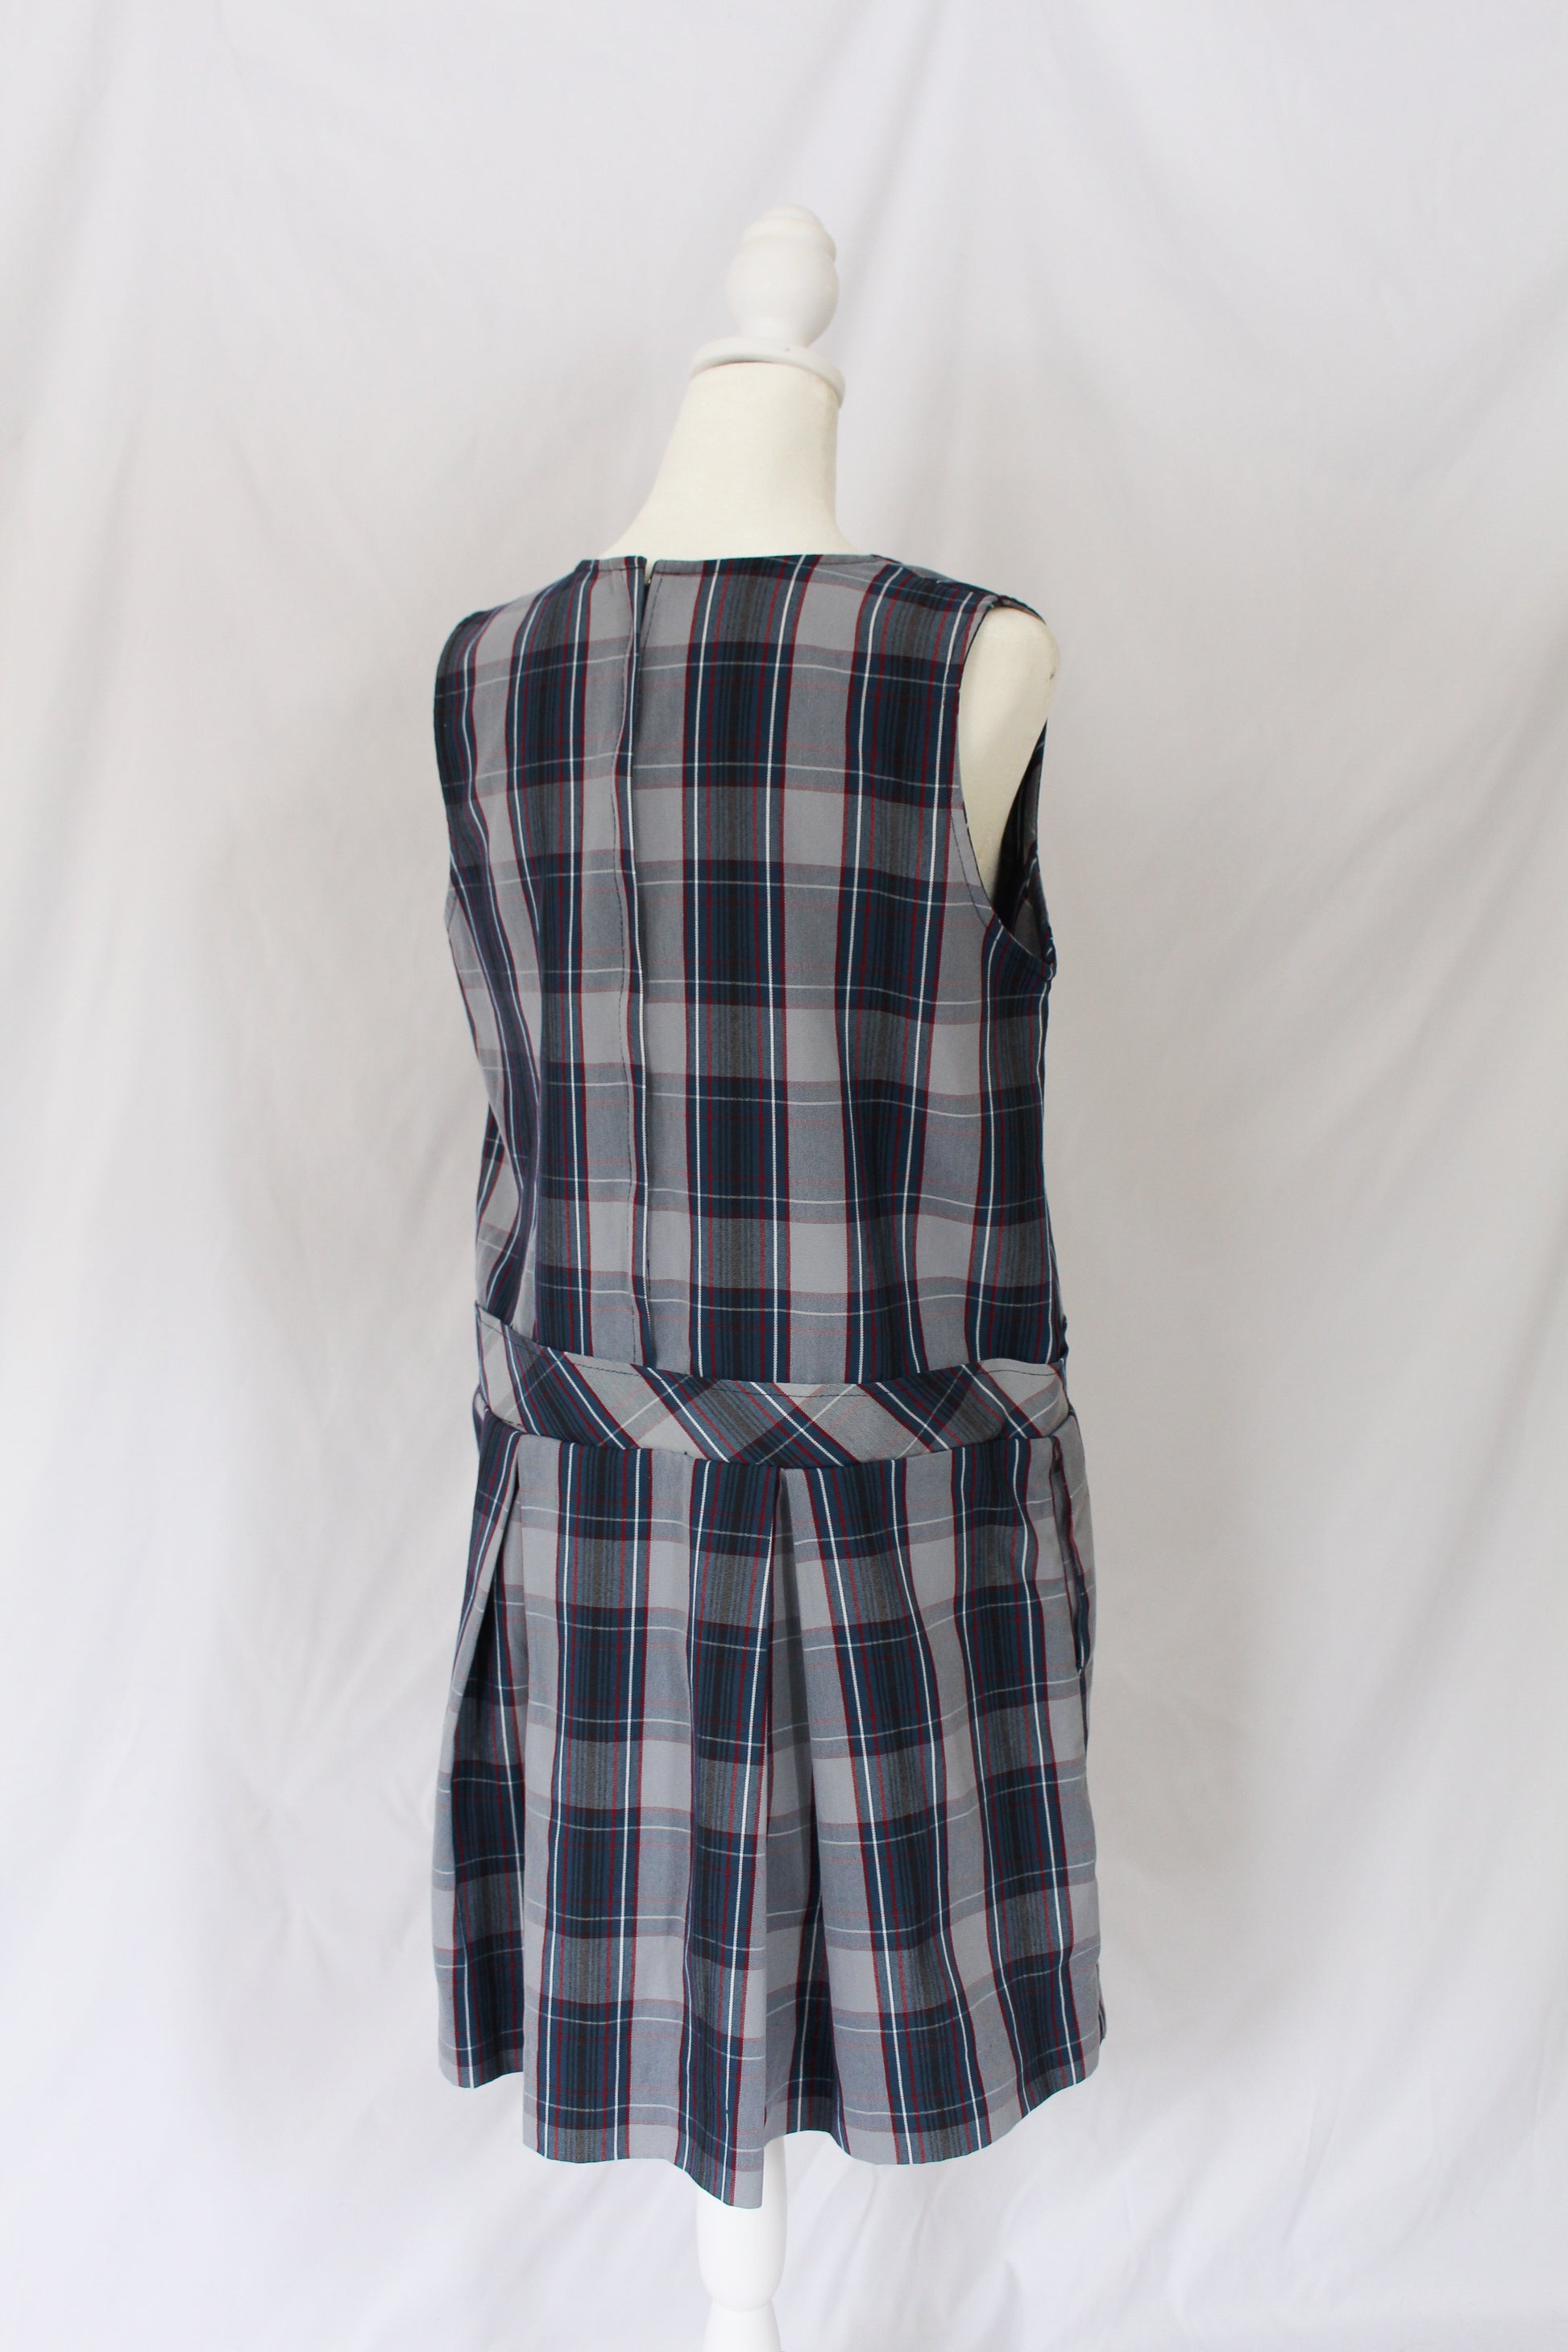 vintage plaid school uniform blue plaid dress